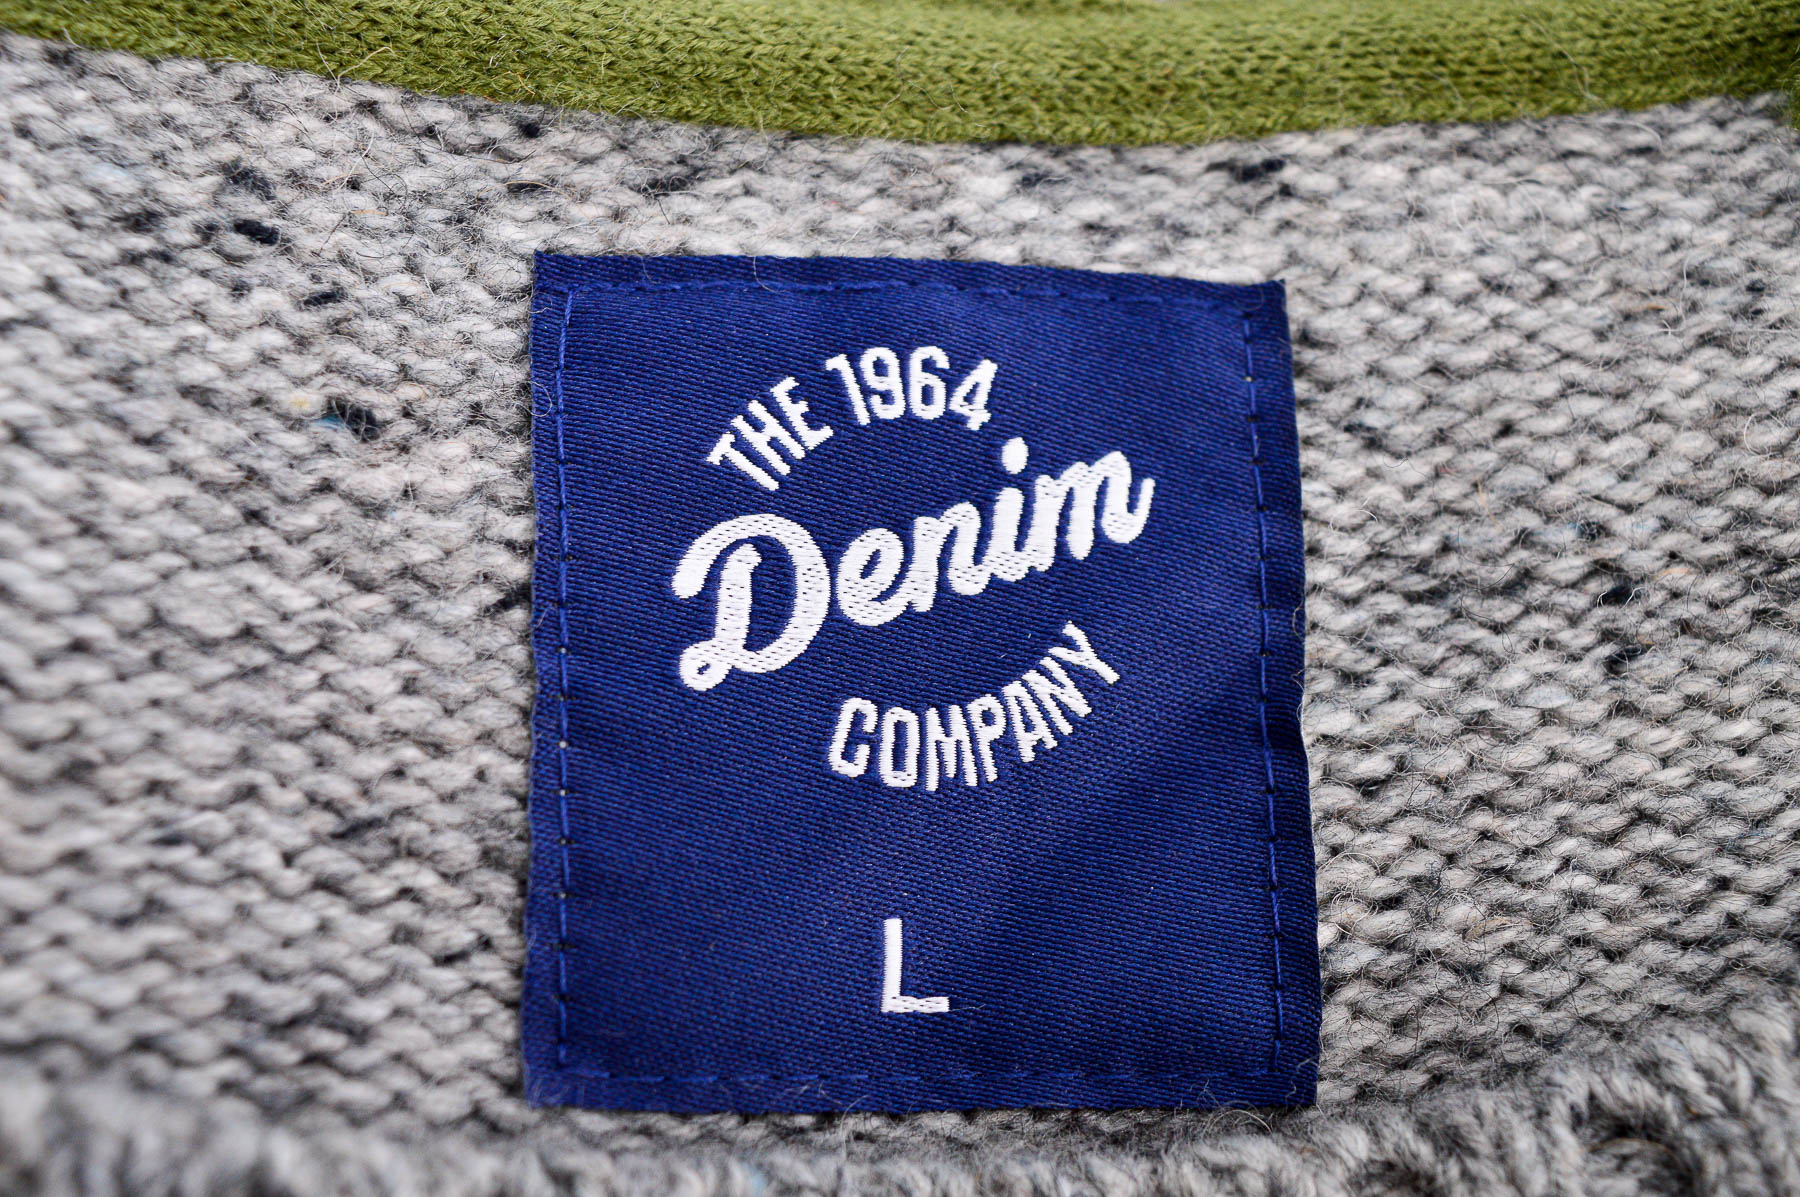 Men's sweater - THE 1964 Denim COMPANY - 2